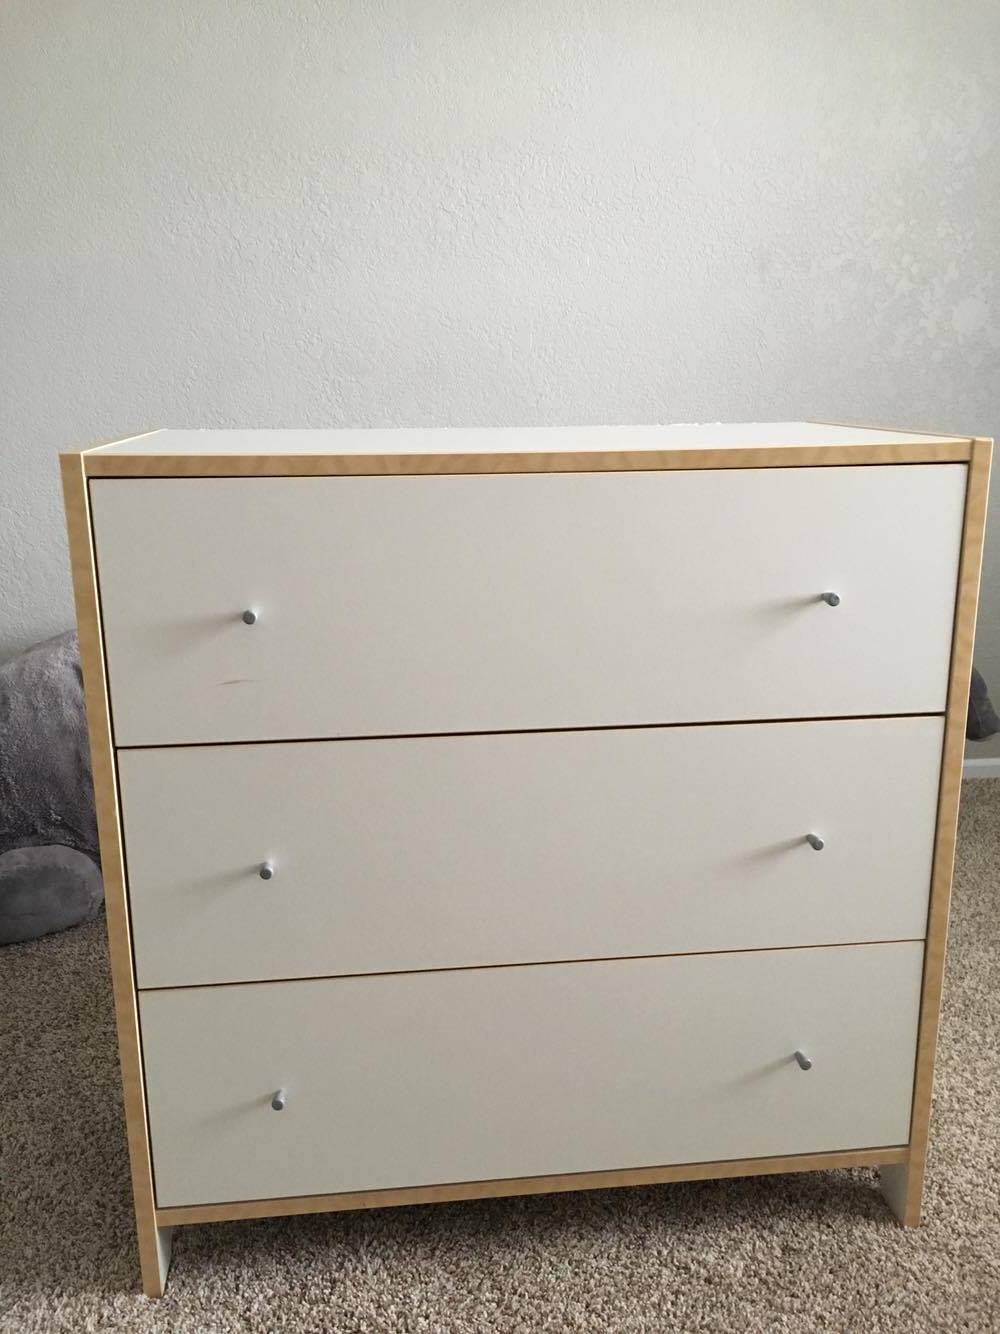 Ikea Nursery Dresser